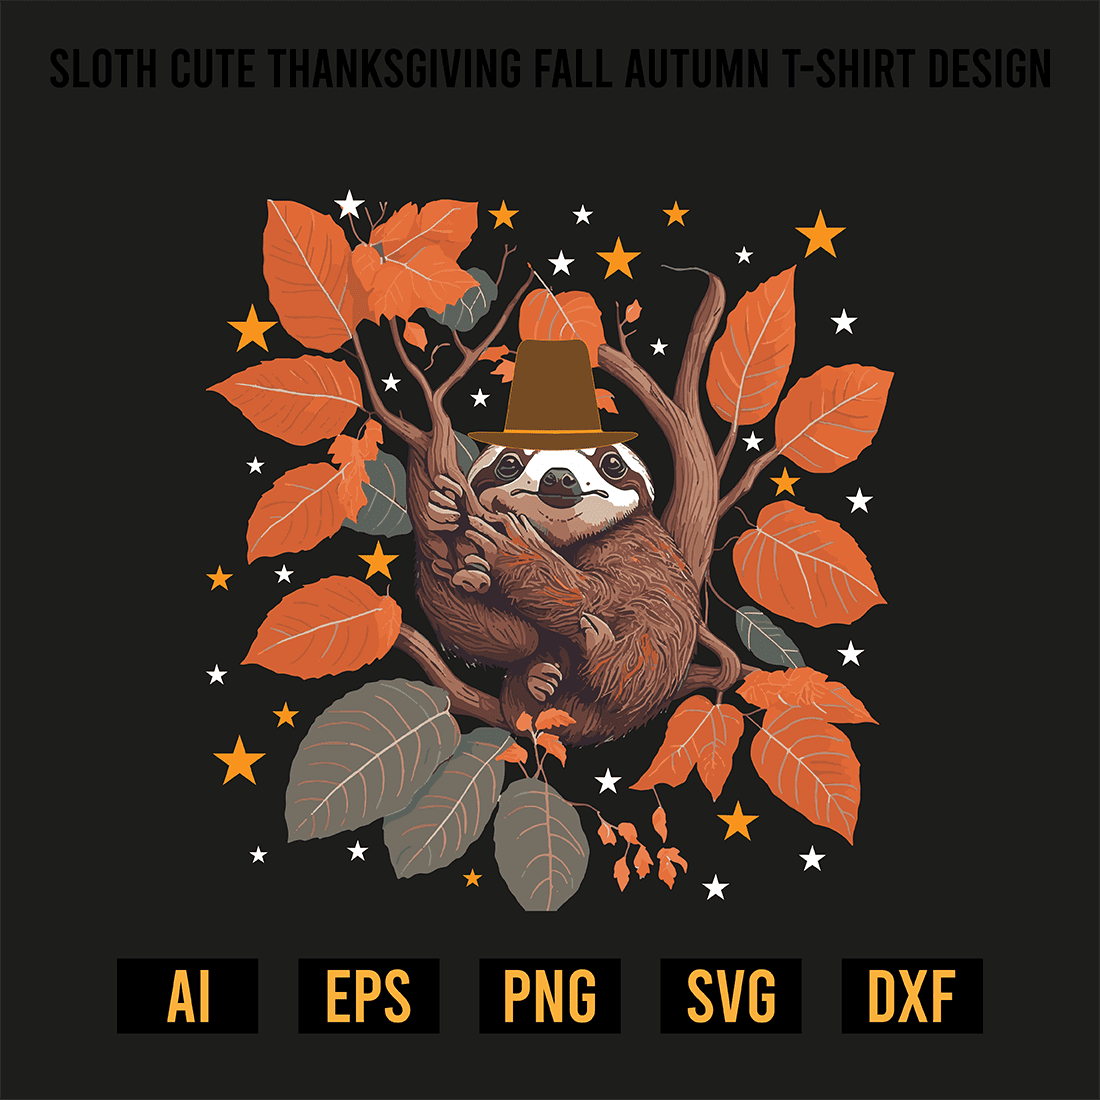 Sloth Cute Thanksgiving Fall Autumn T-Shirt Design preview image.